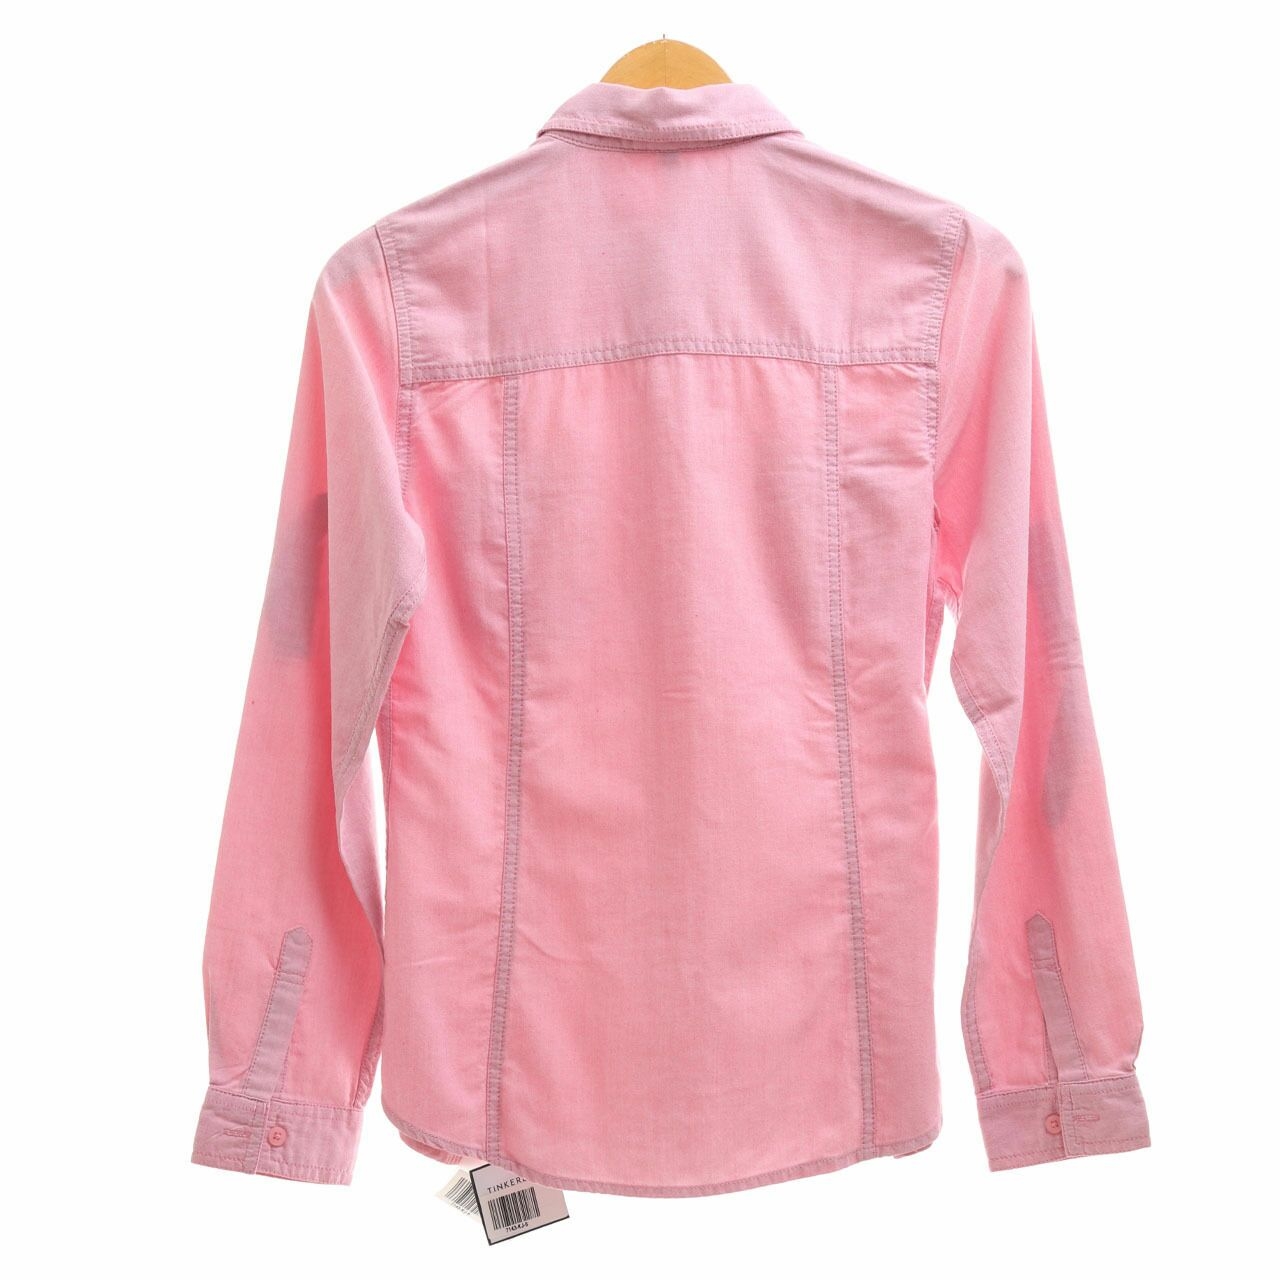 Rodeo Pink Shirt